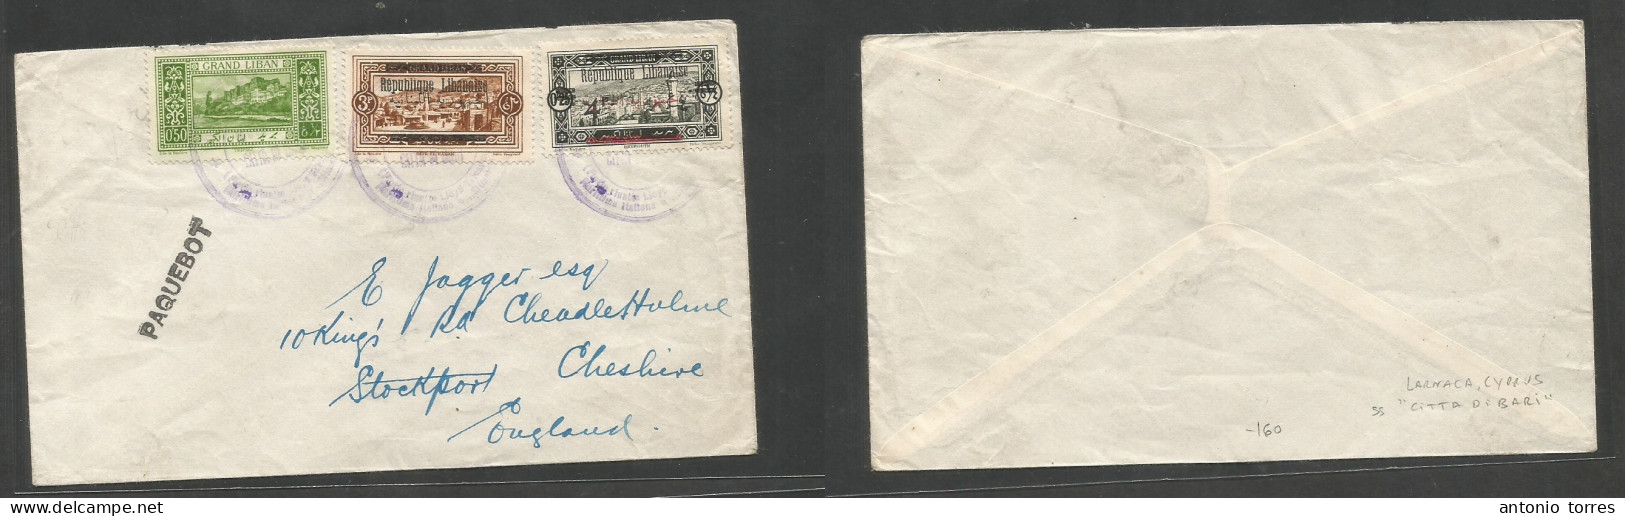 Lebanon. C. 1928. Multifkd Pqbt Mail Envelope To Stockport, England, Lilac Cachet "Citta De Bari" Cancelled On Transit A - Lebanon